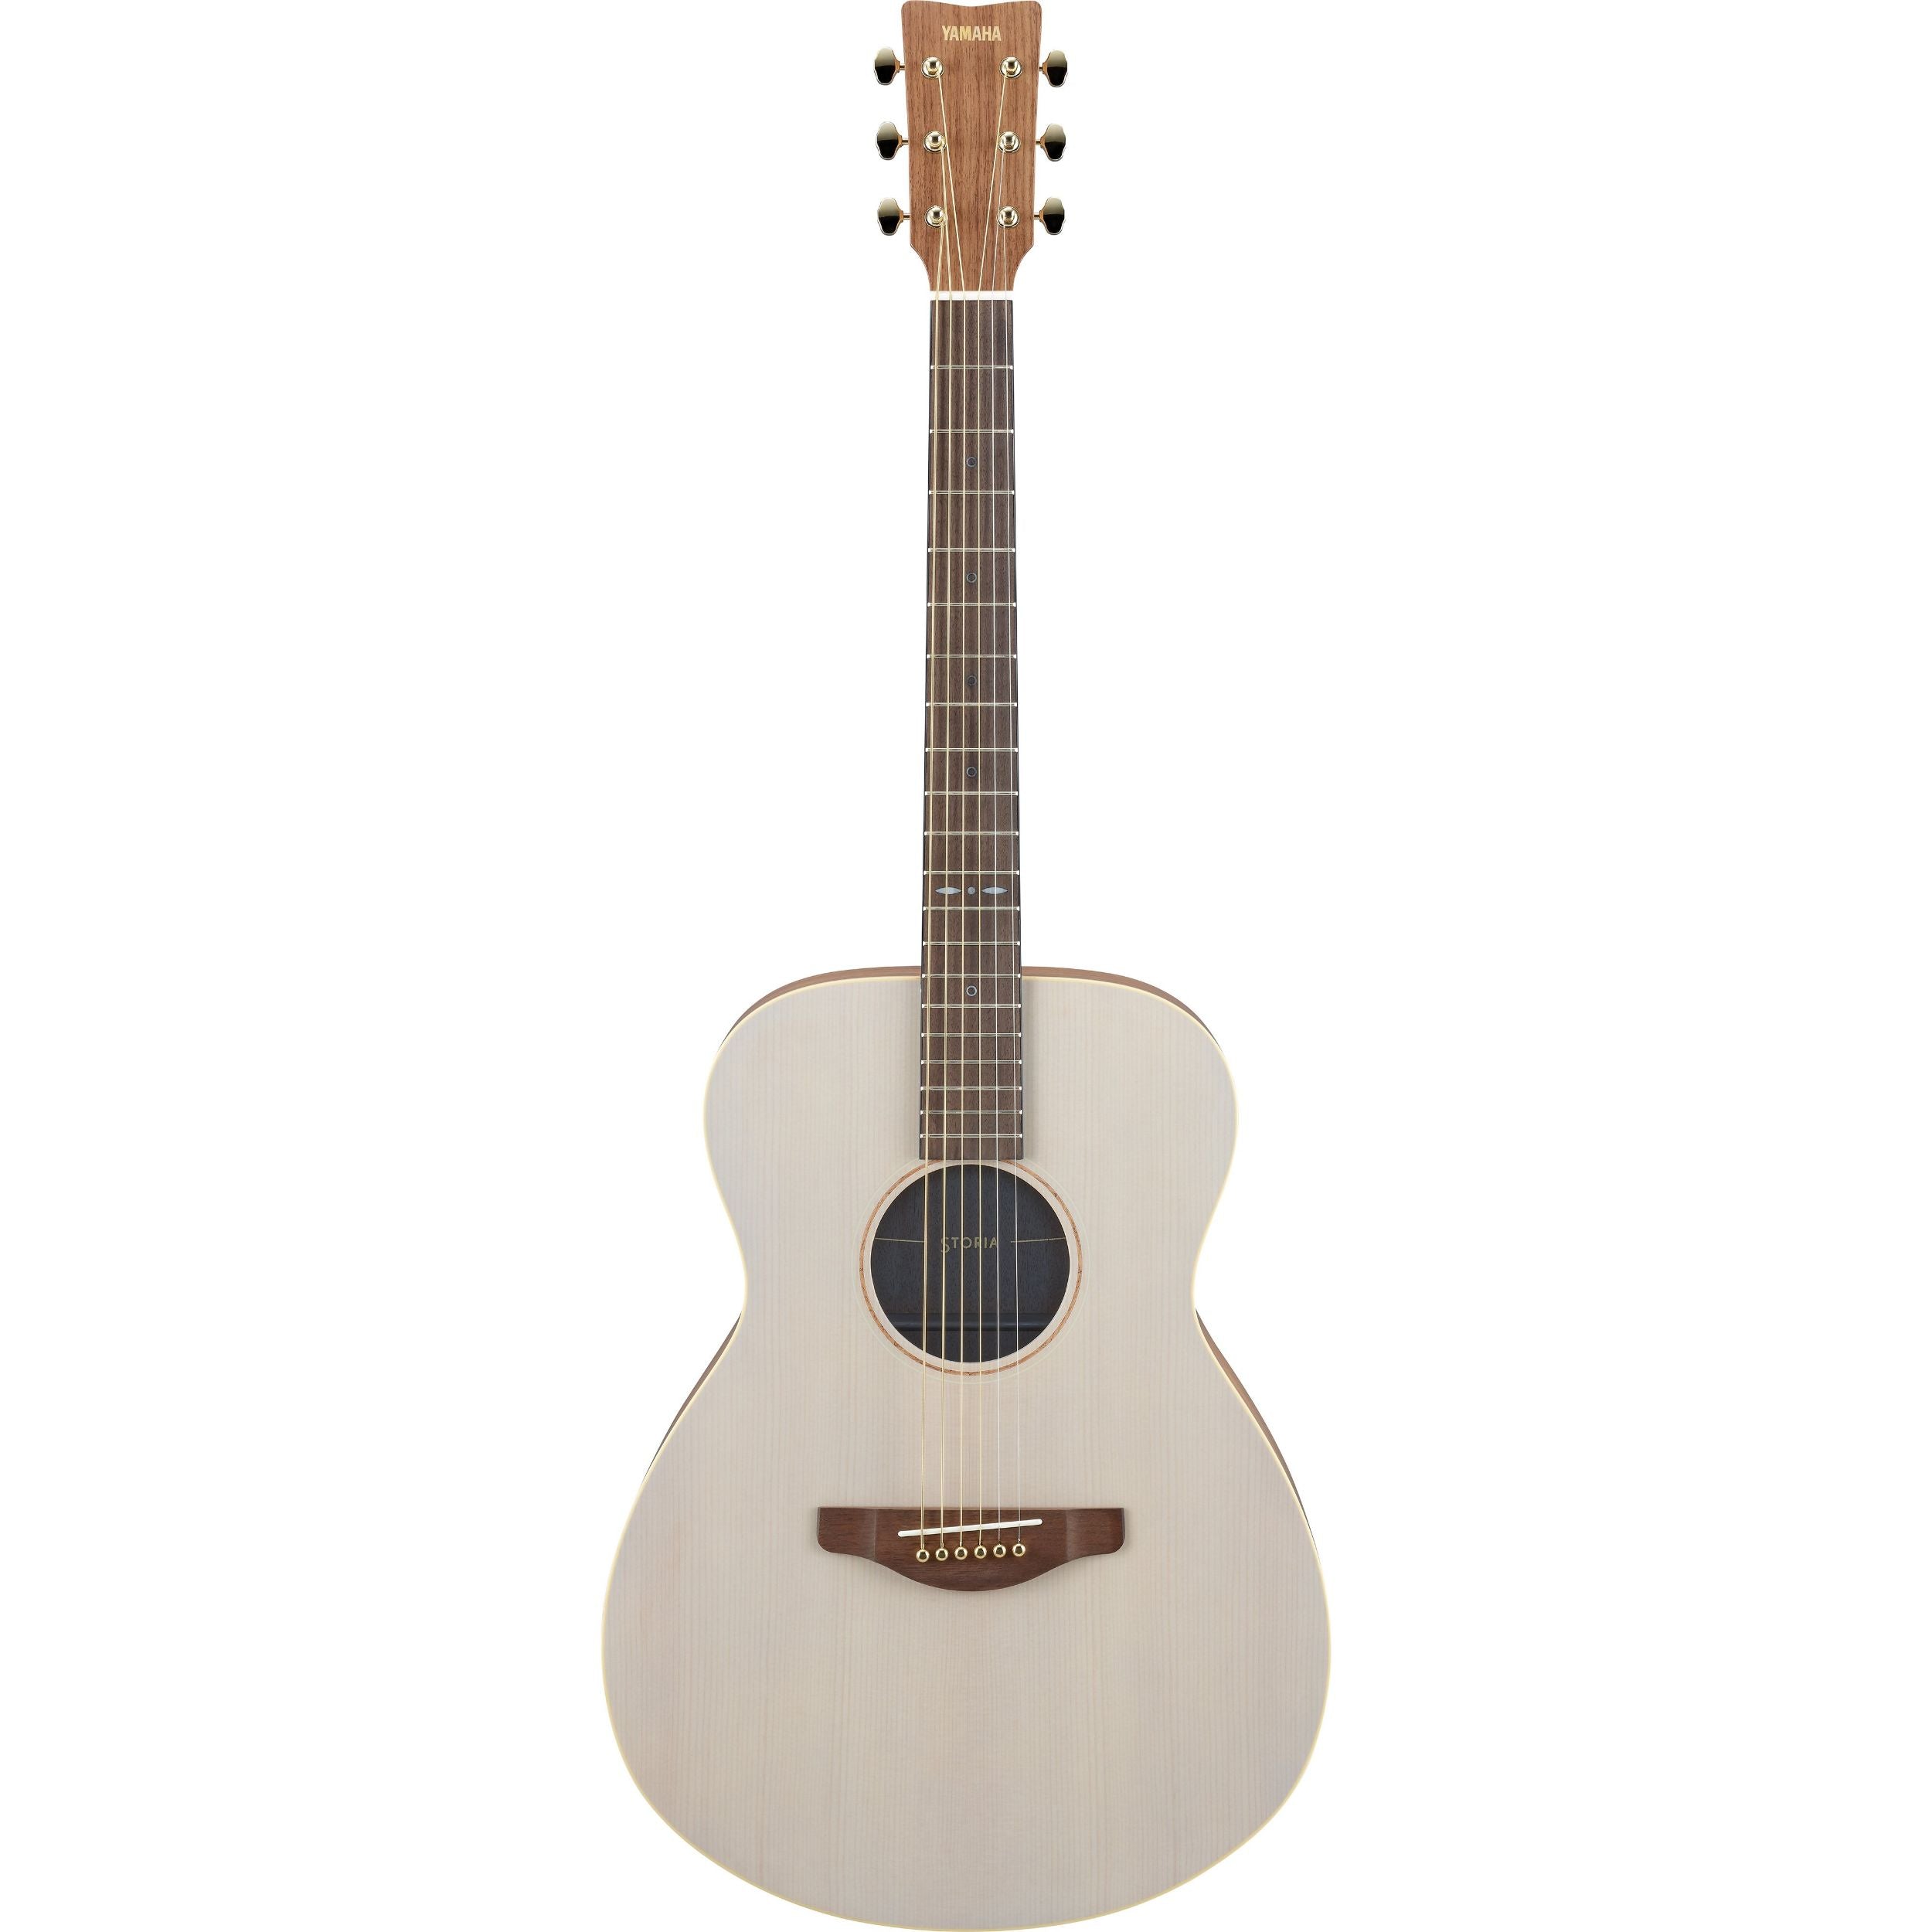 Yamaha STORIA-I Acoustic-Electric Guitar, Off White